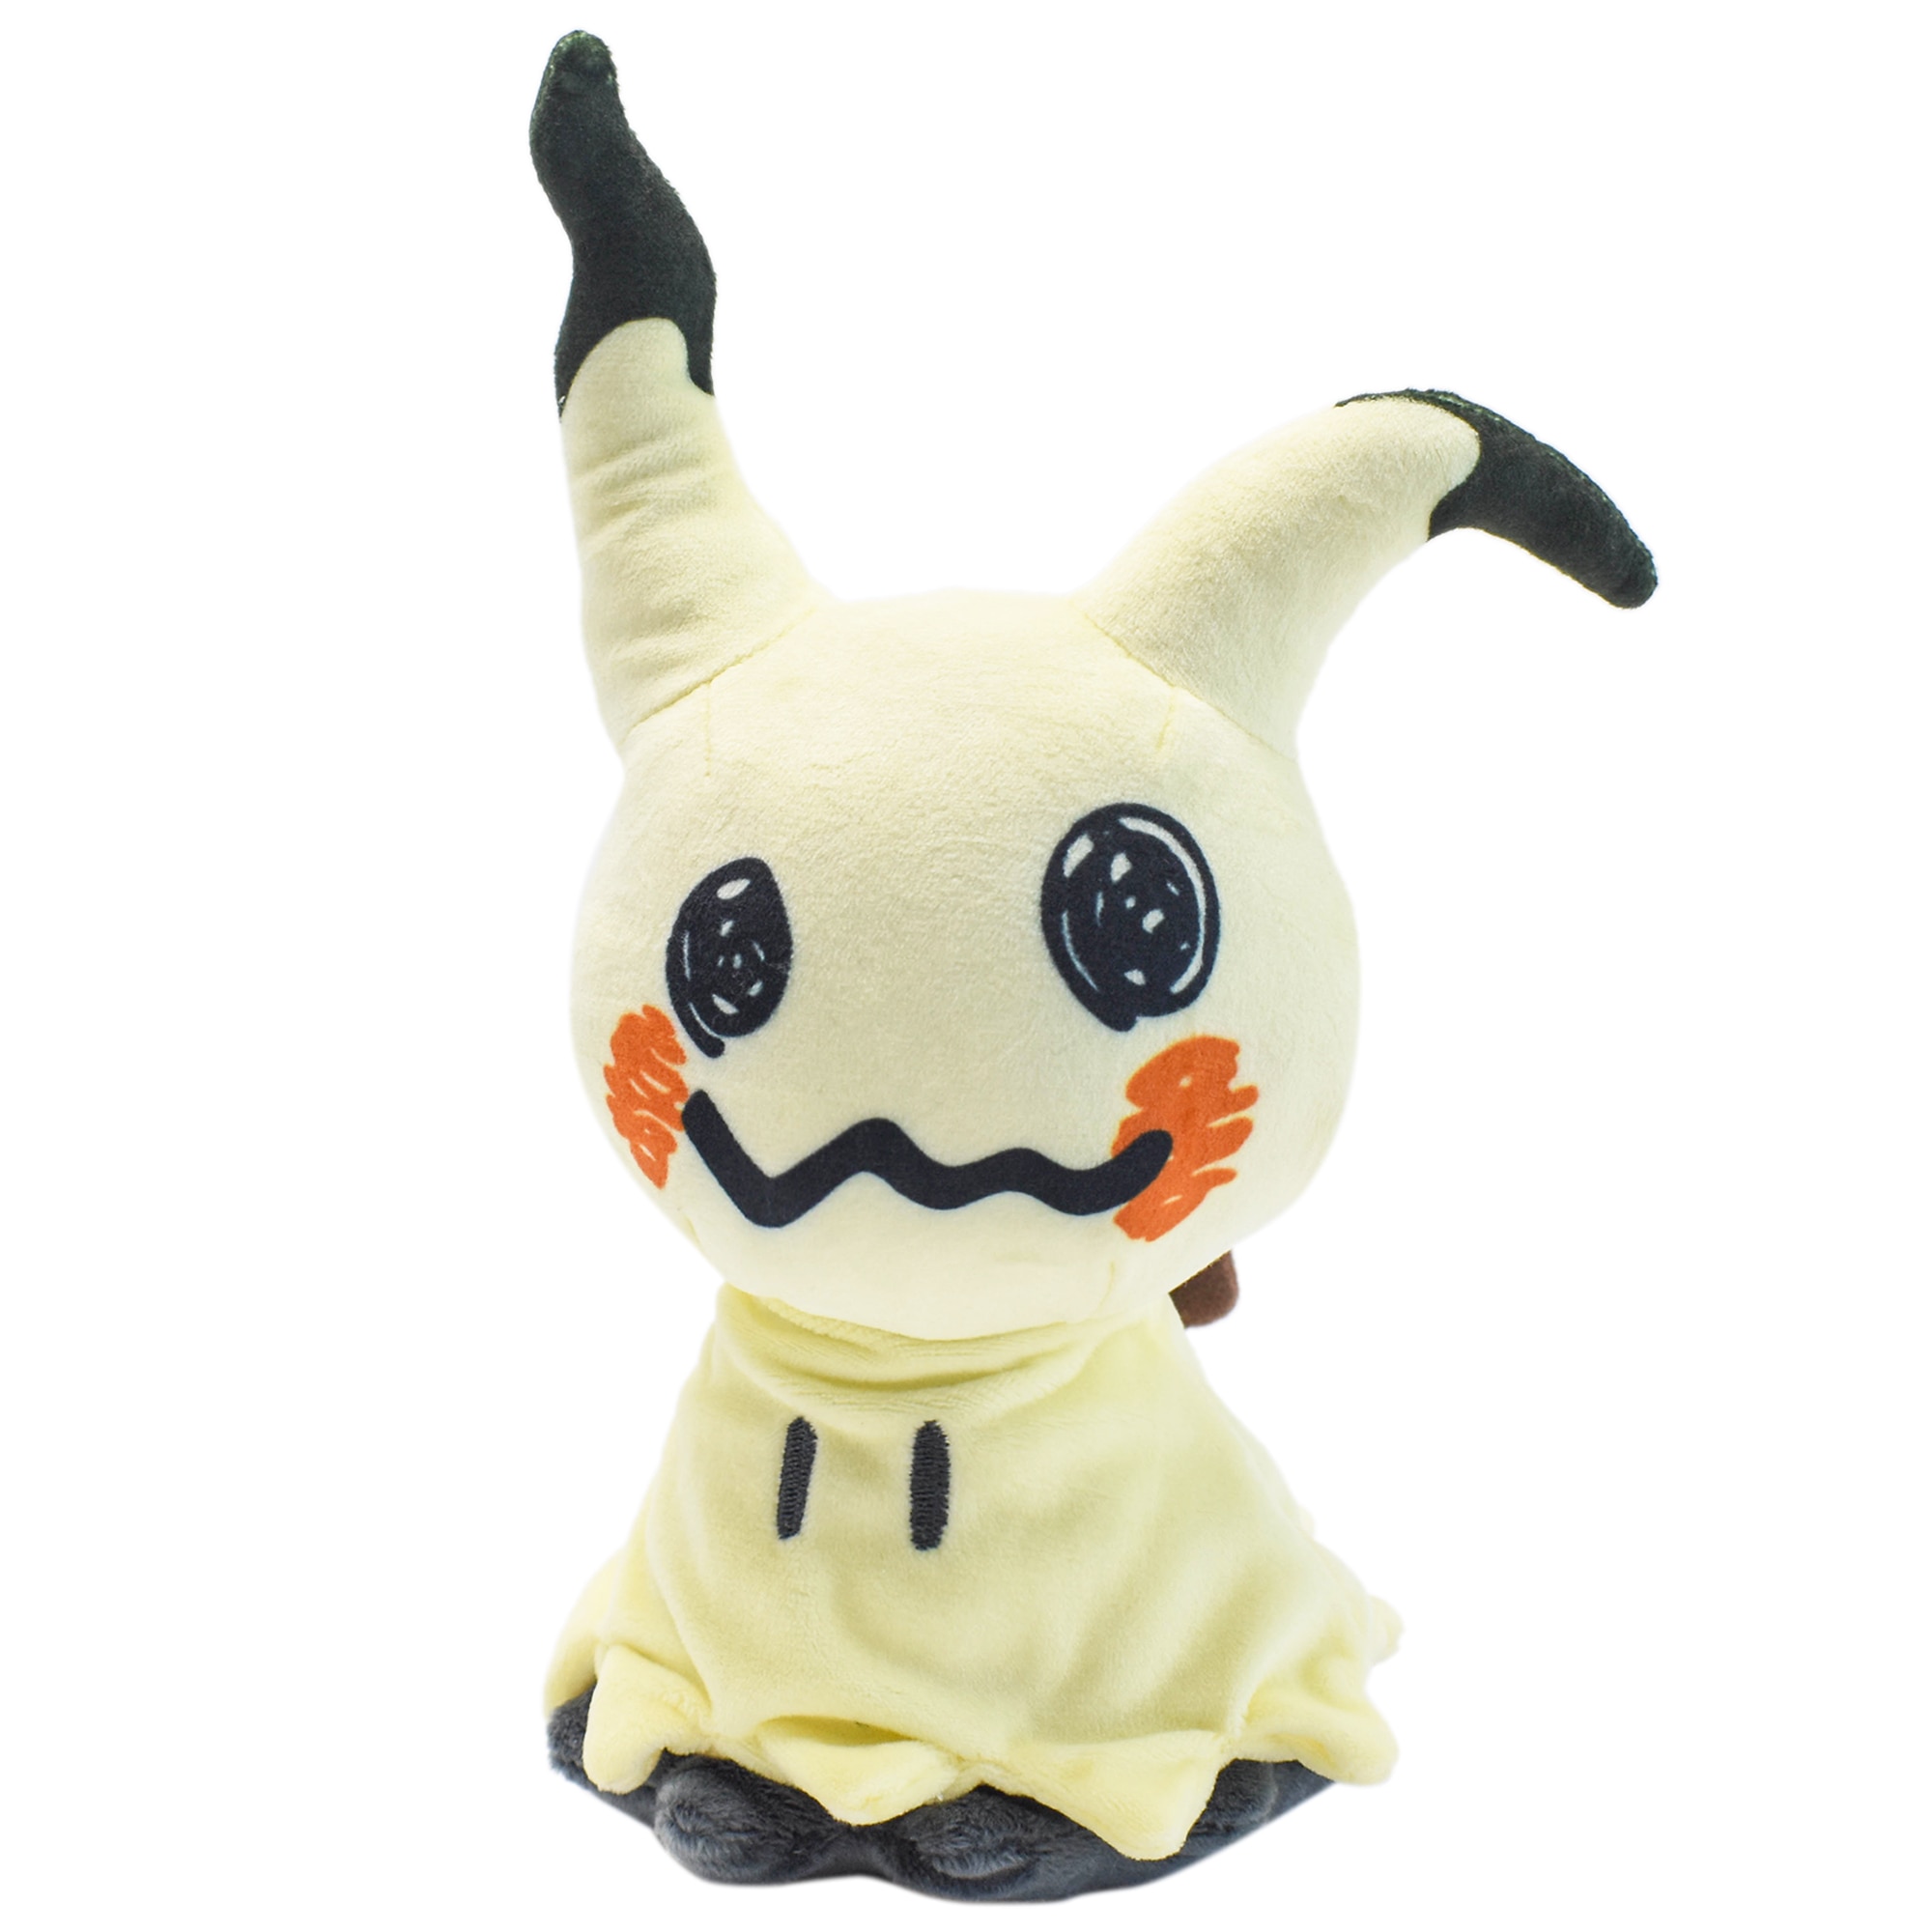 Mimikyu Pokemon Plush Doll Soft Animal Hot Toys Great Gift For Kids Free Shipping 23CM - Mimikyu Plush